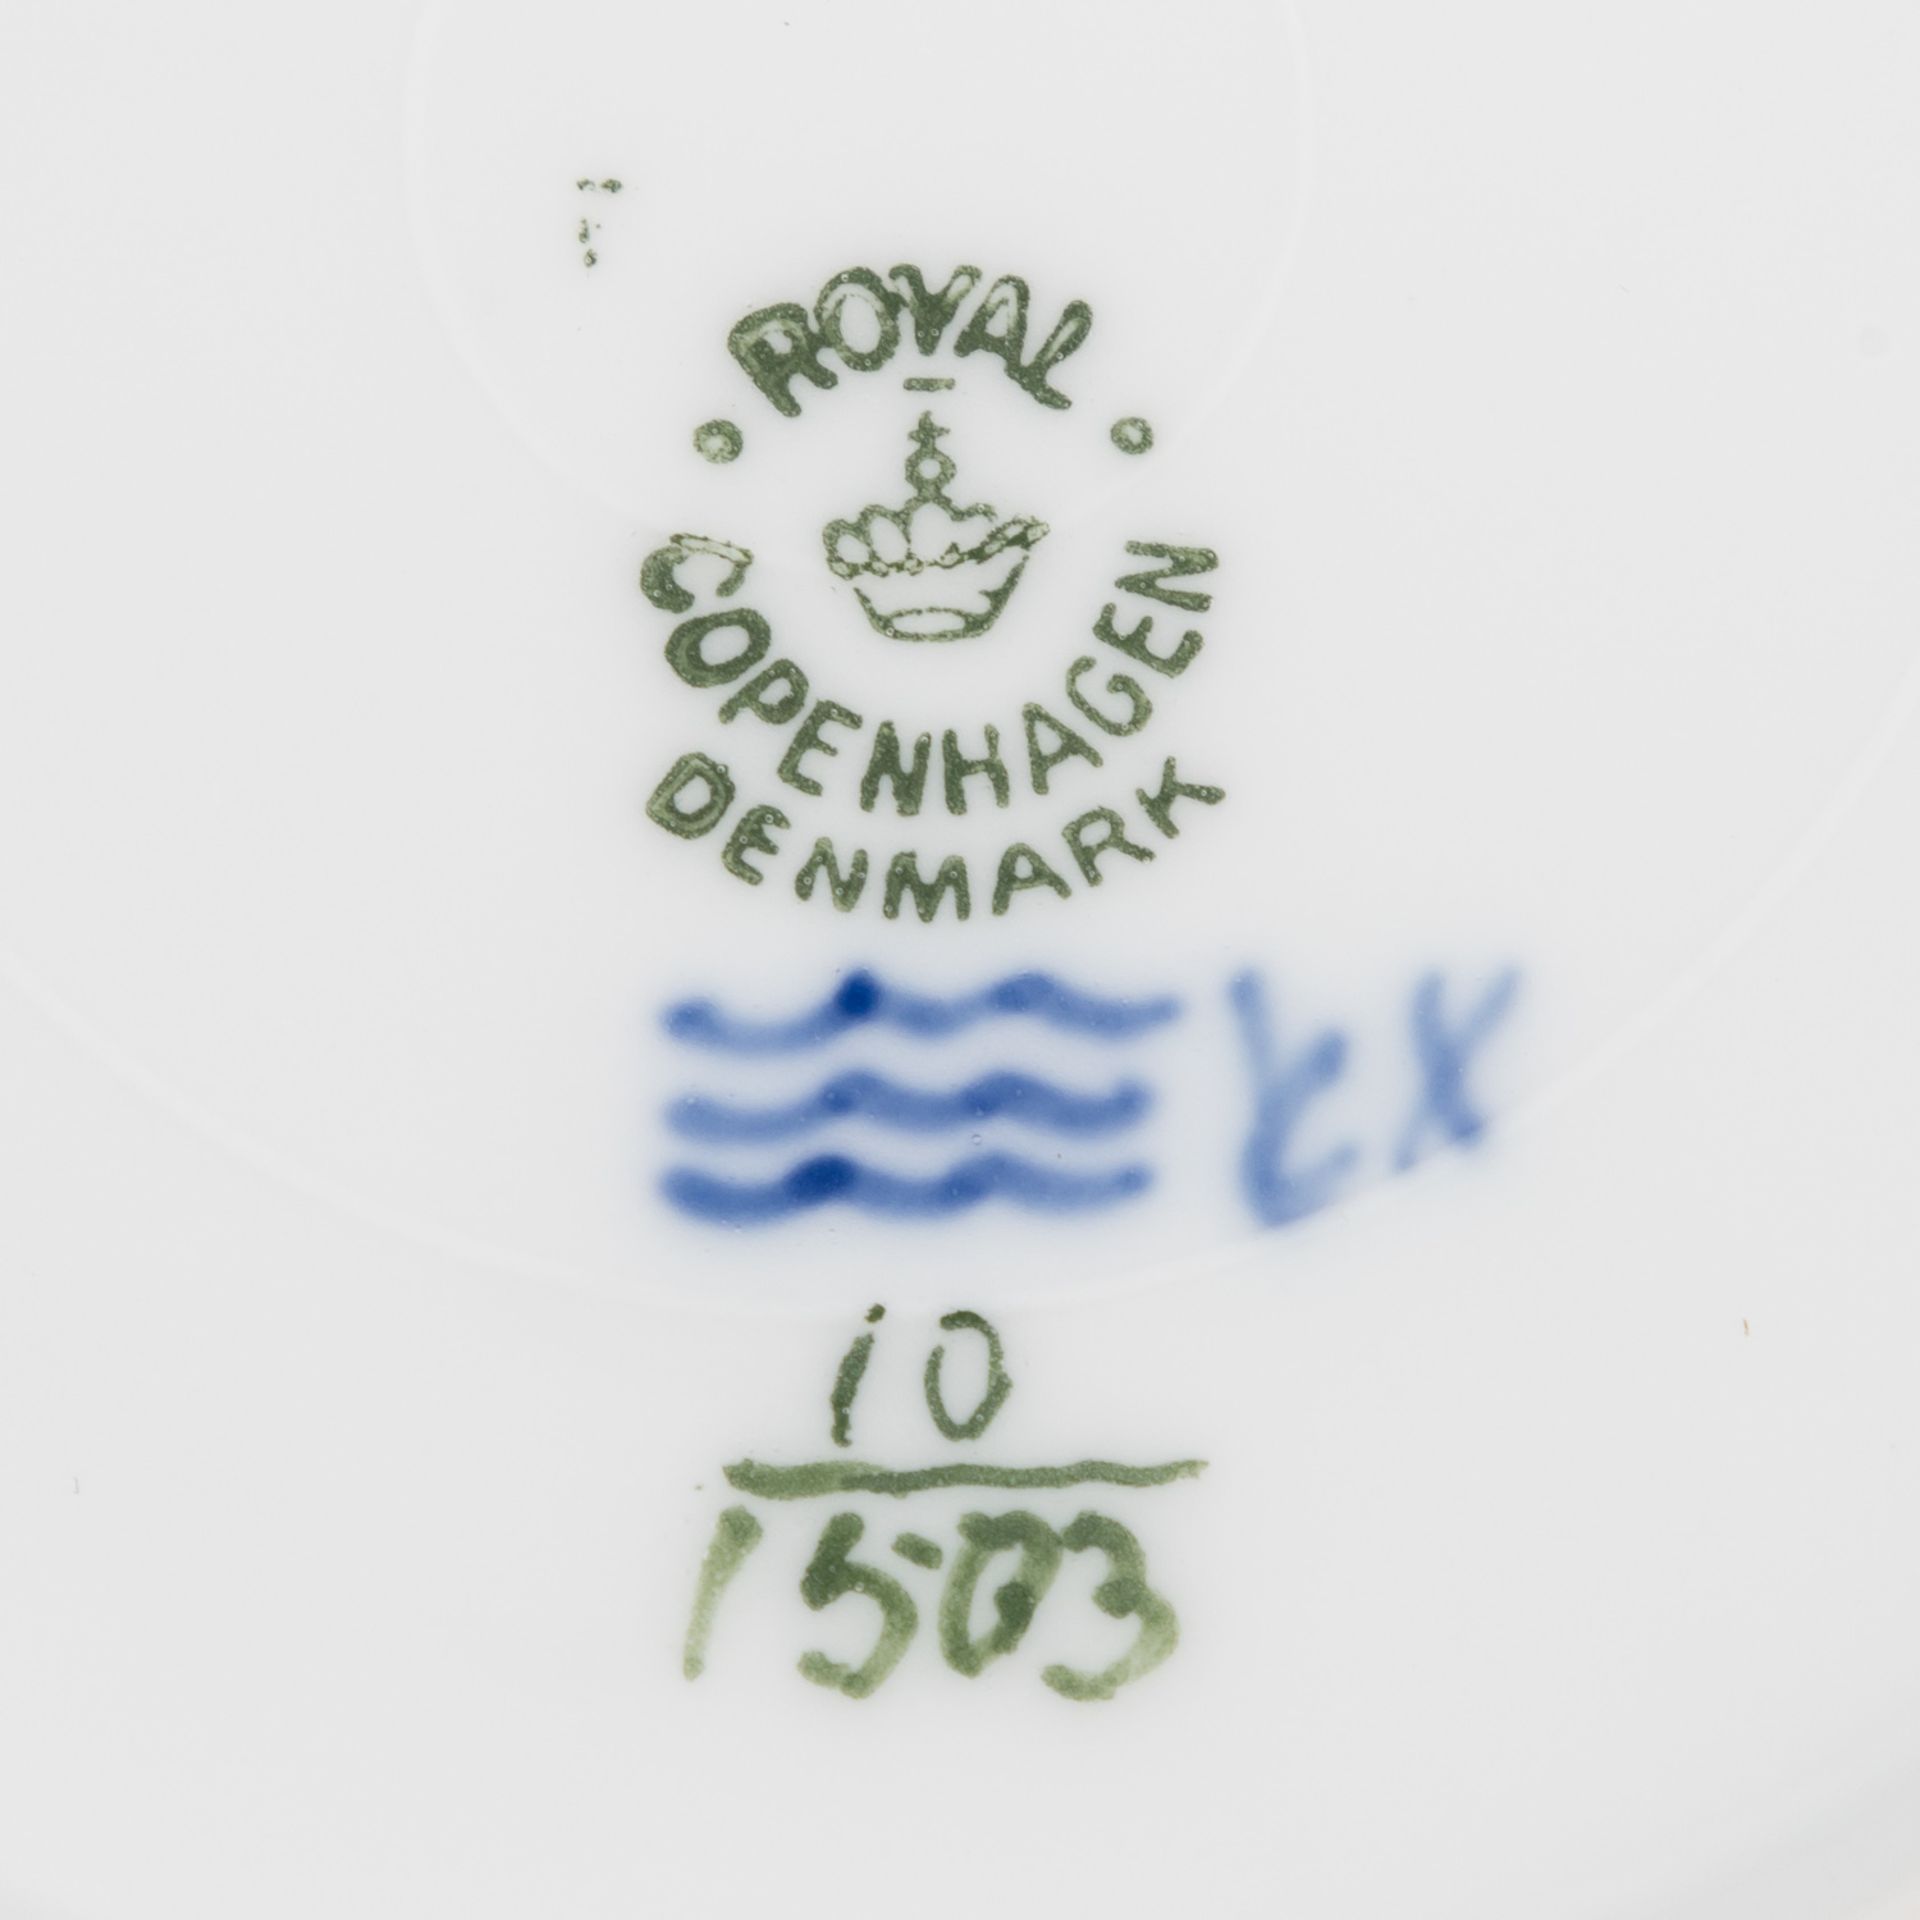 ROYAL COPENHAGEN Teeservice f. 6 Personen 'Blaue Blume', 1950er Jahre. - Image 8 of 8